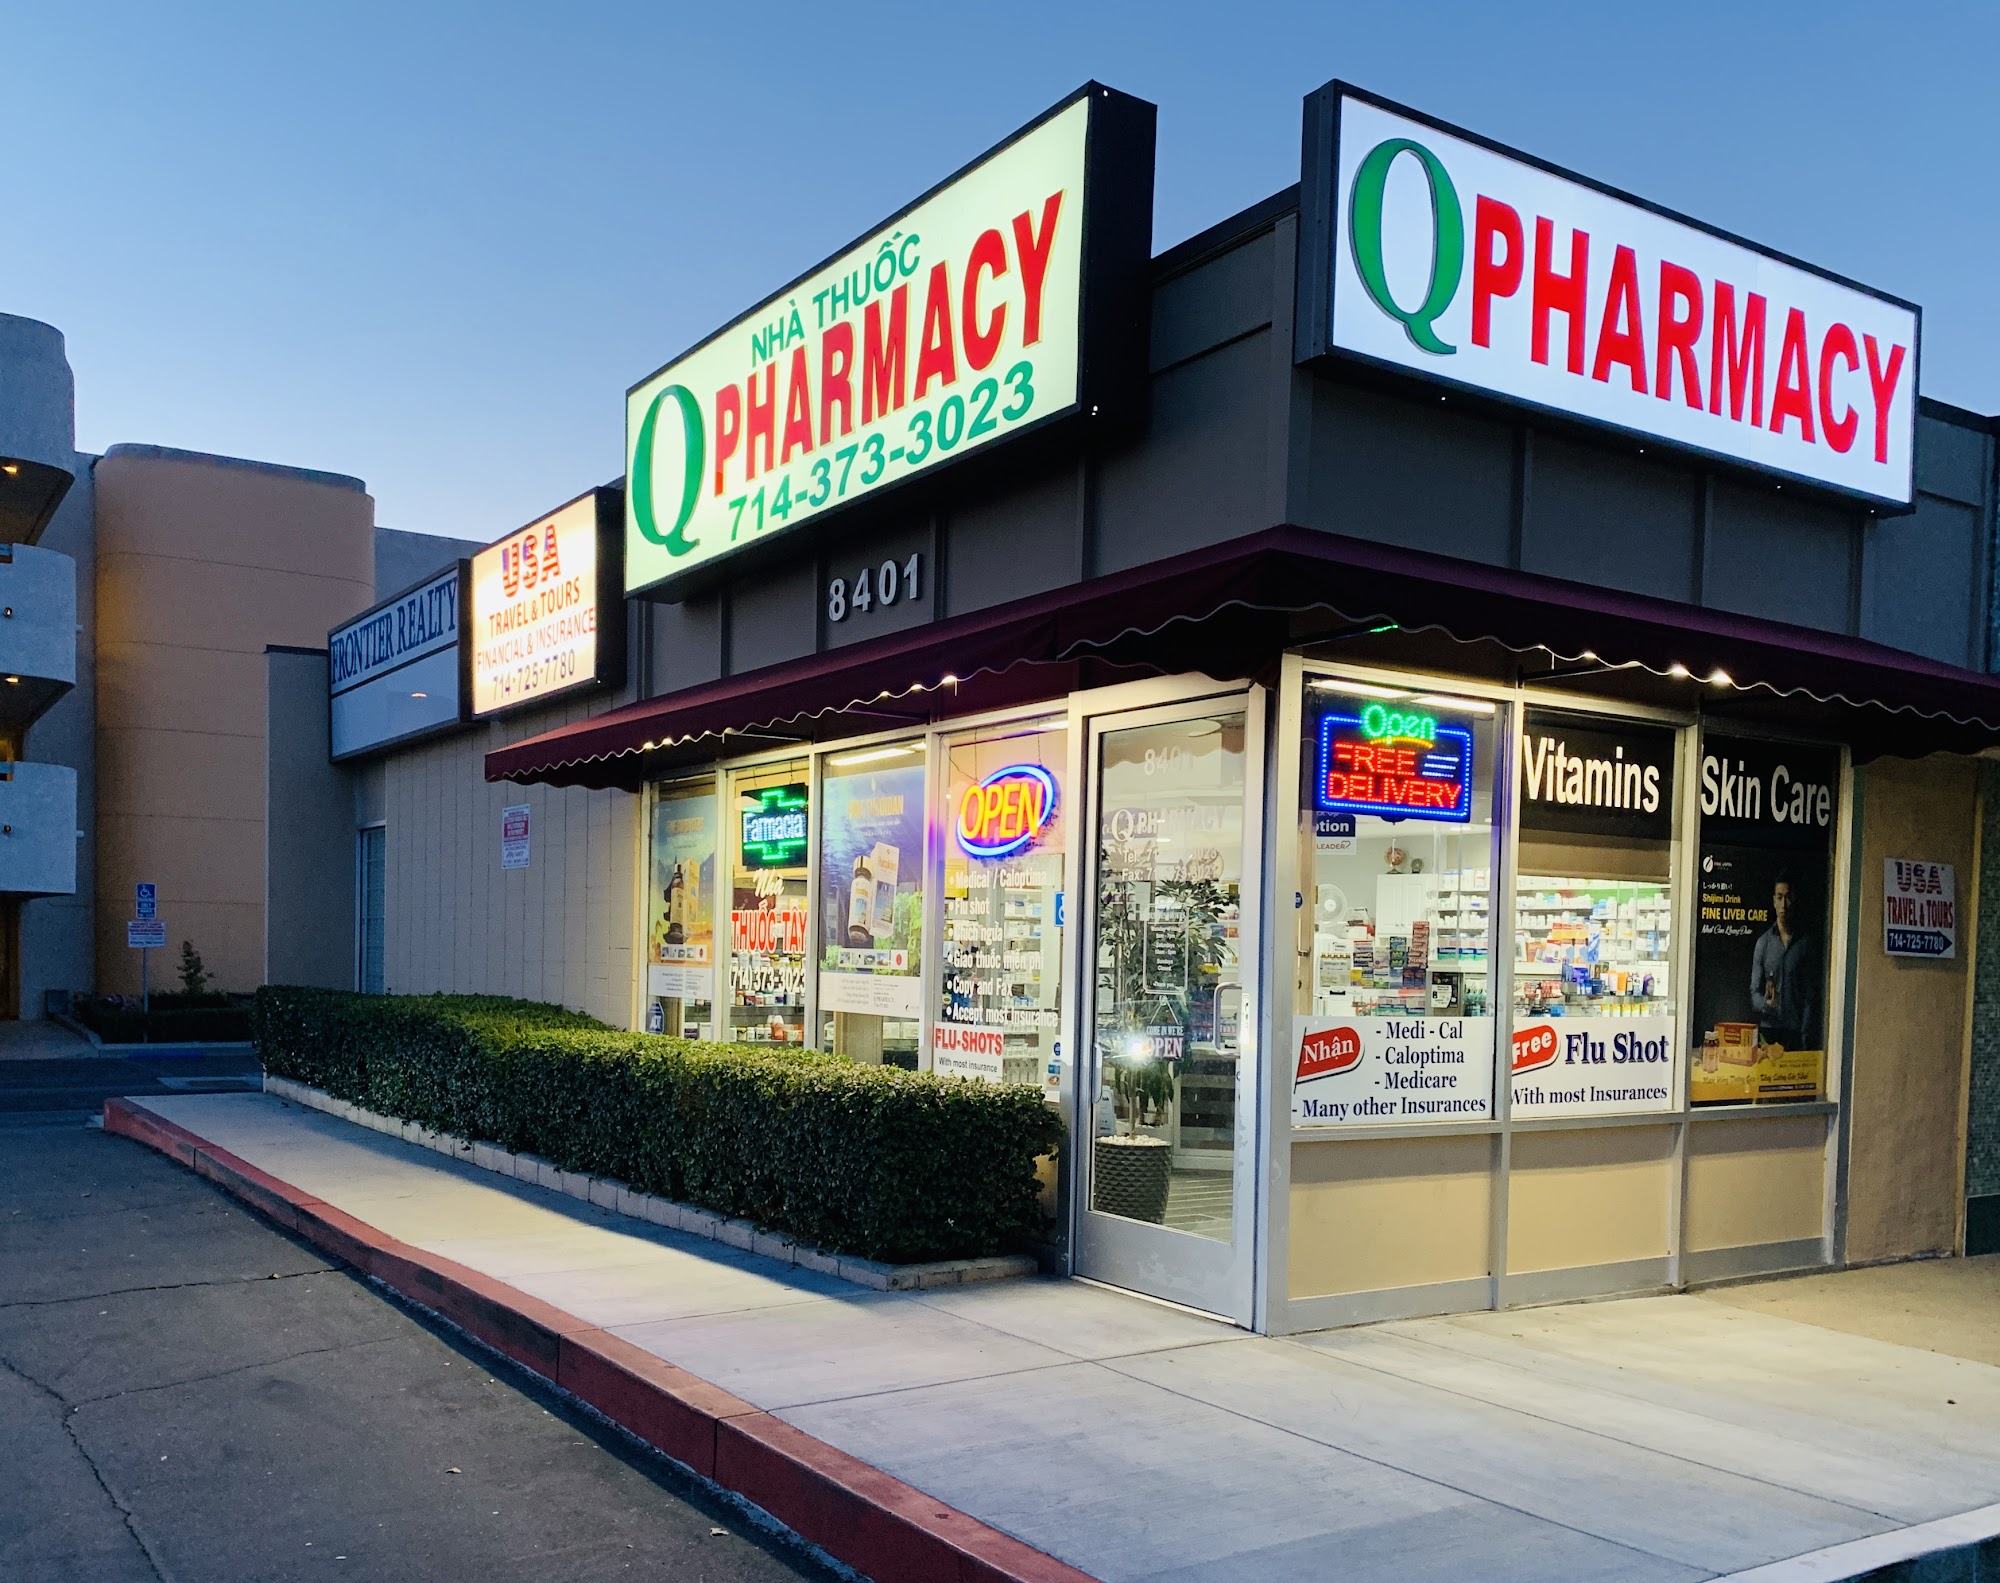 Q Pharmacy